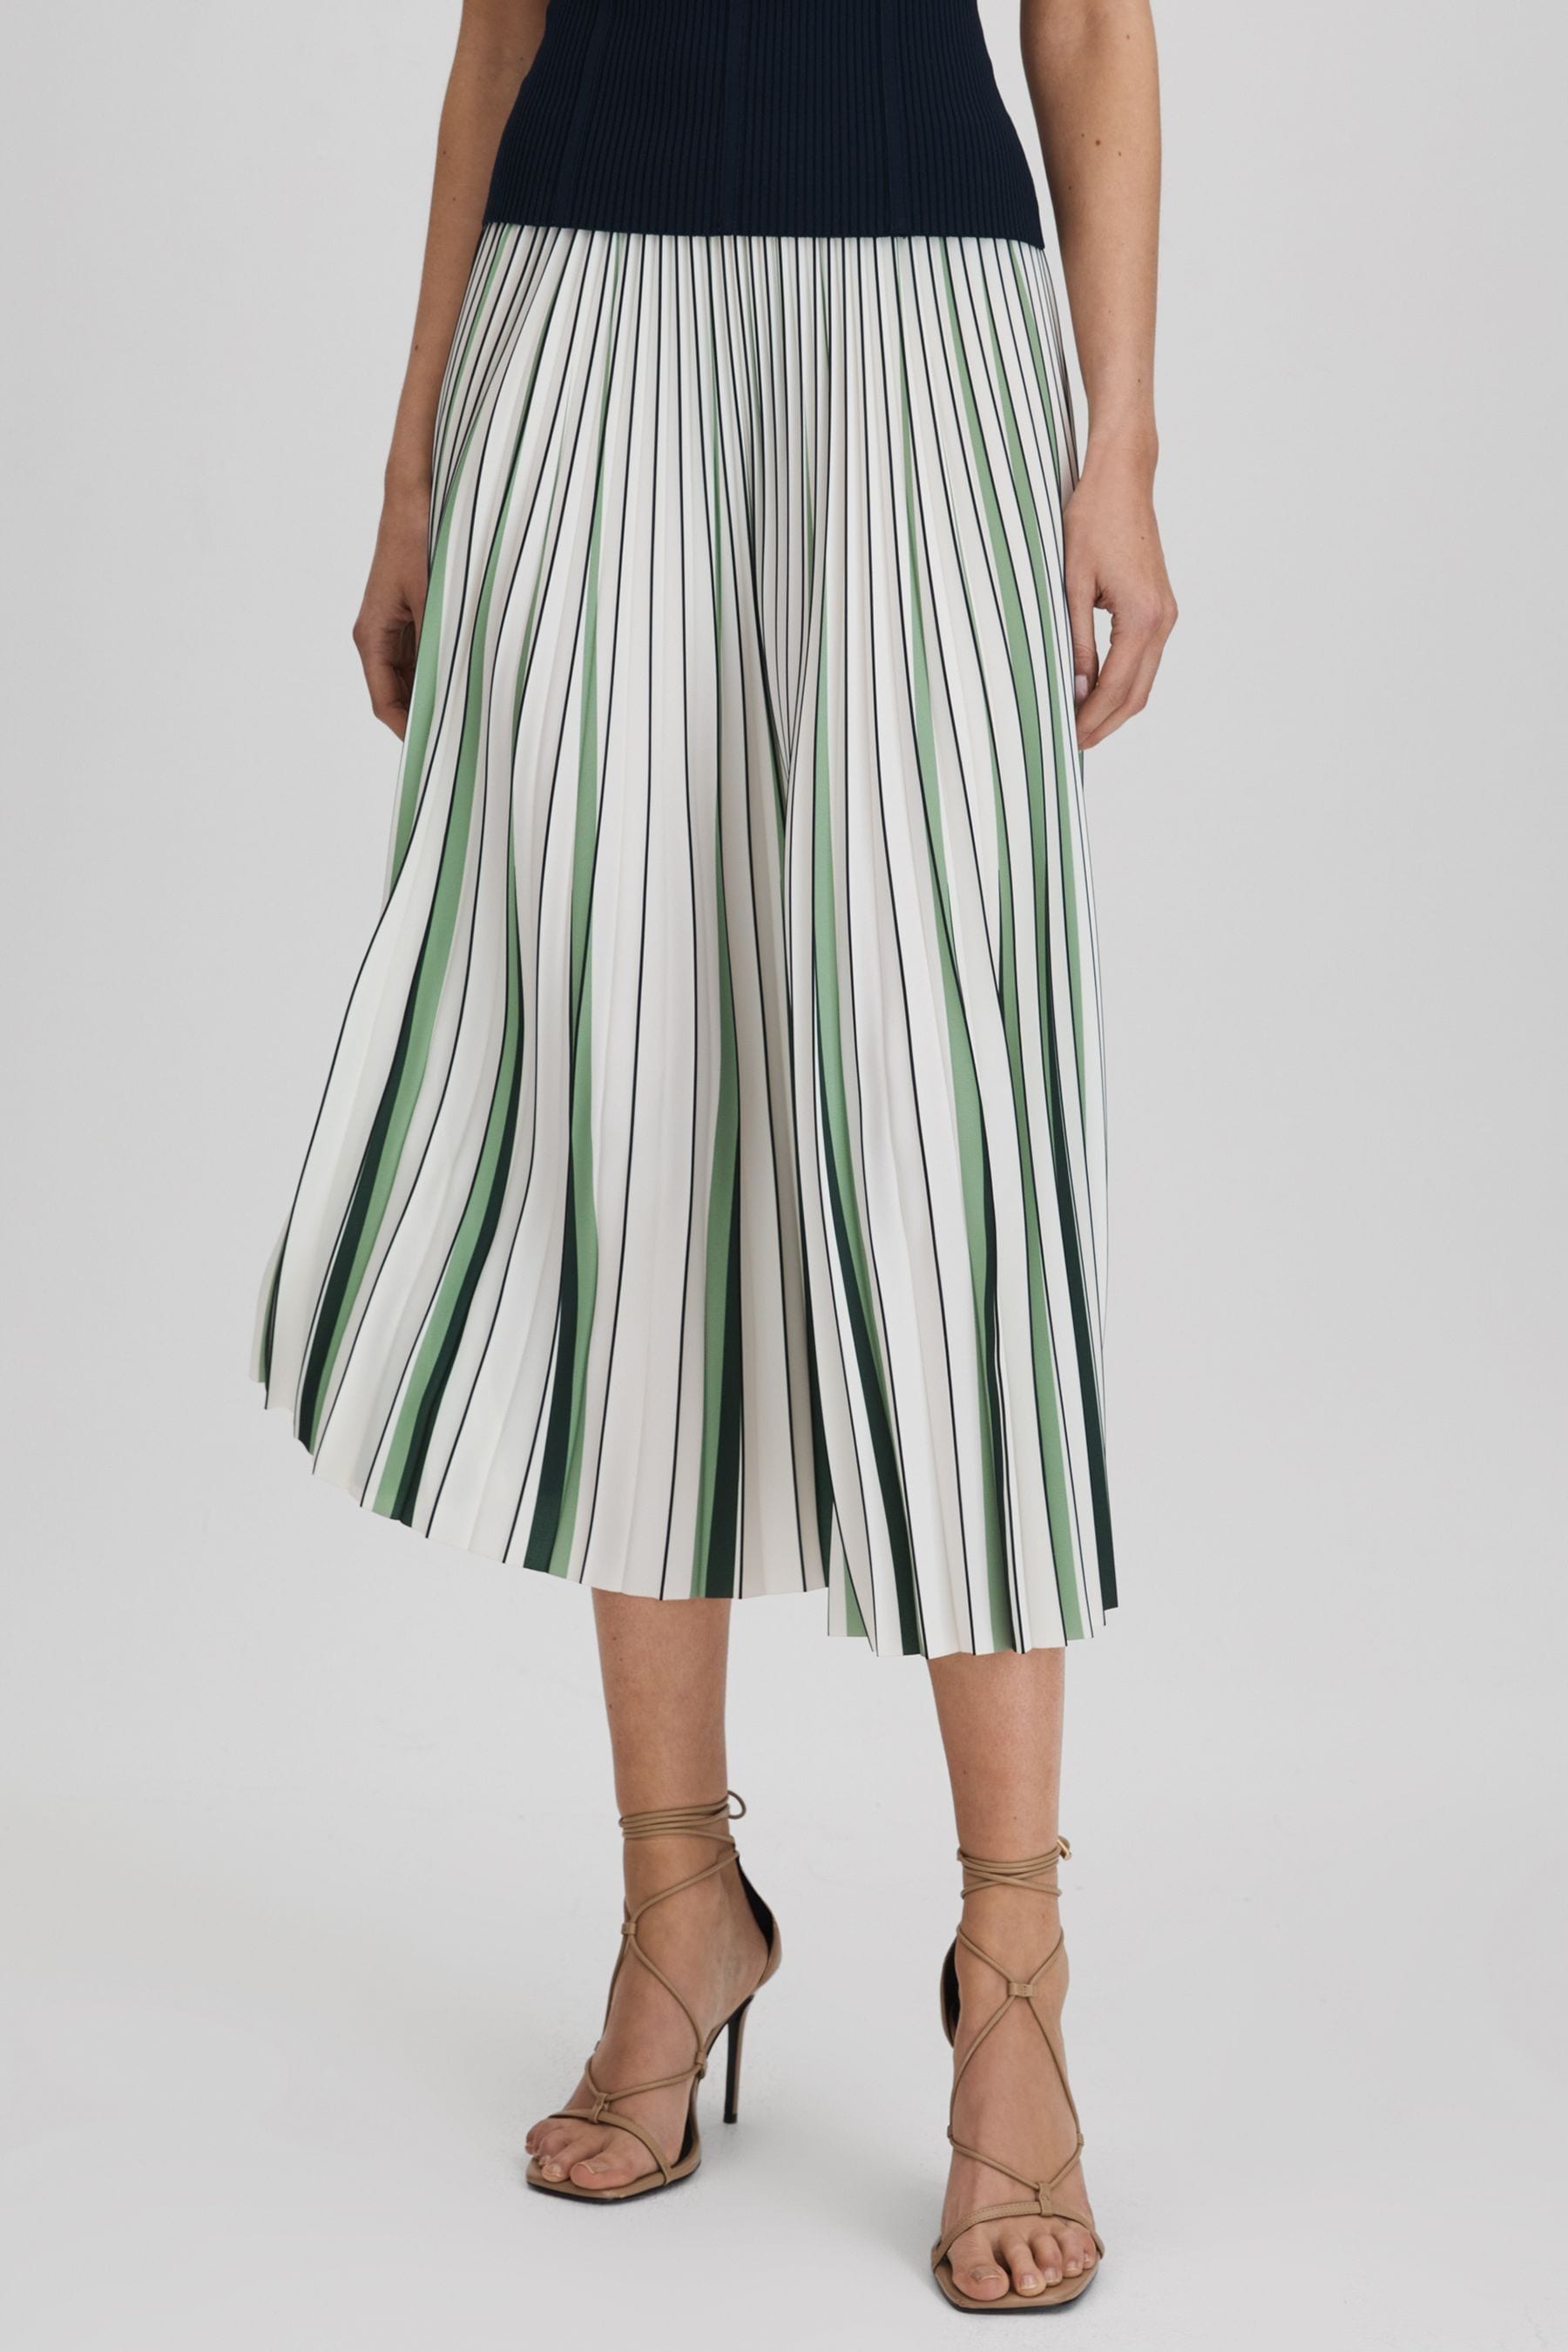 Reiss Saige - Green/cream Pleated Striped Midi Skirt, Us 0